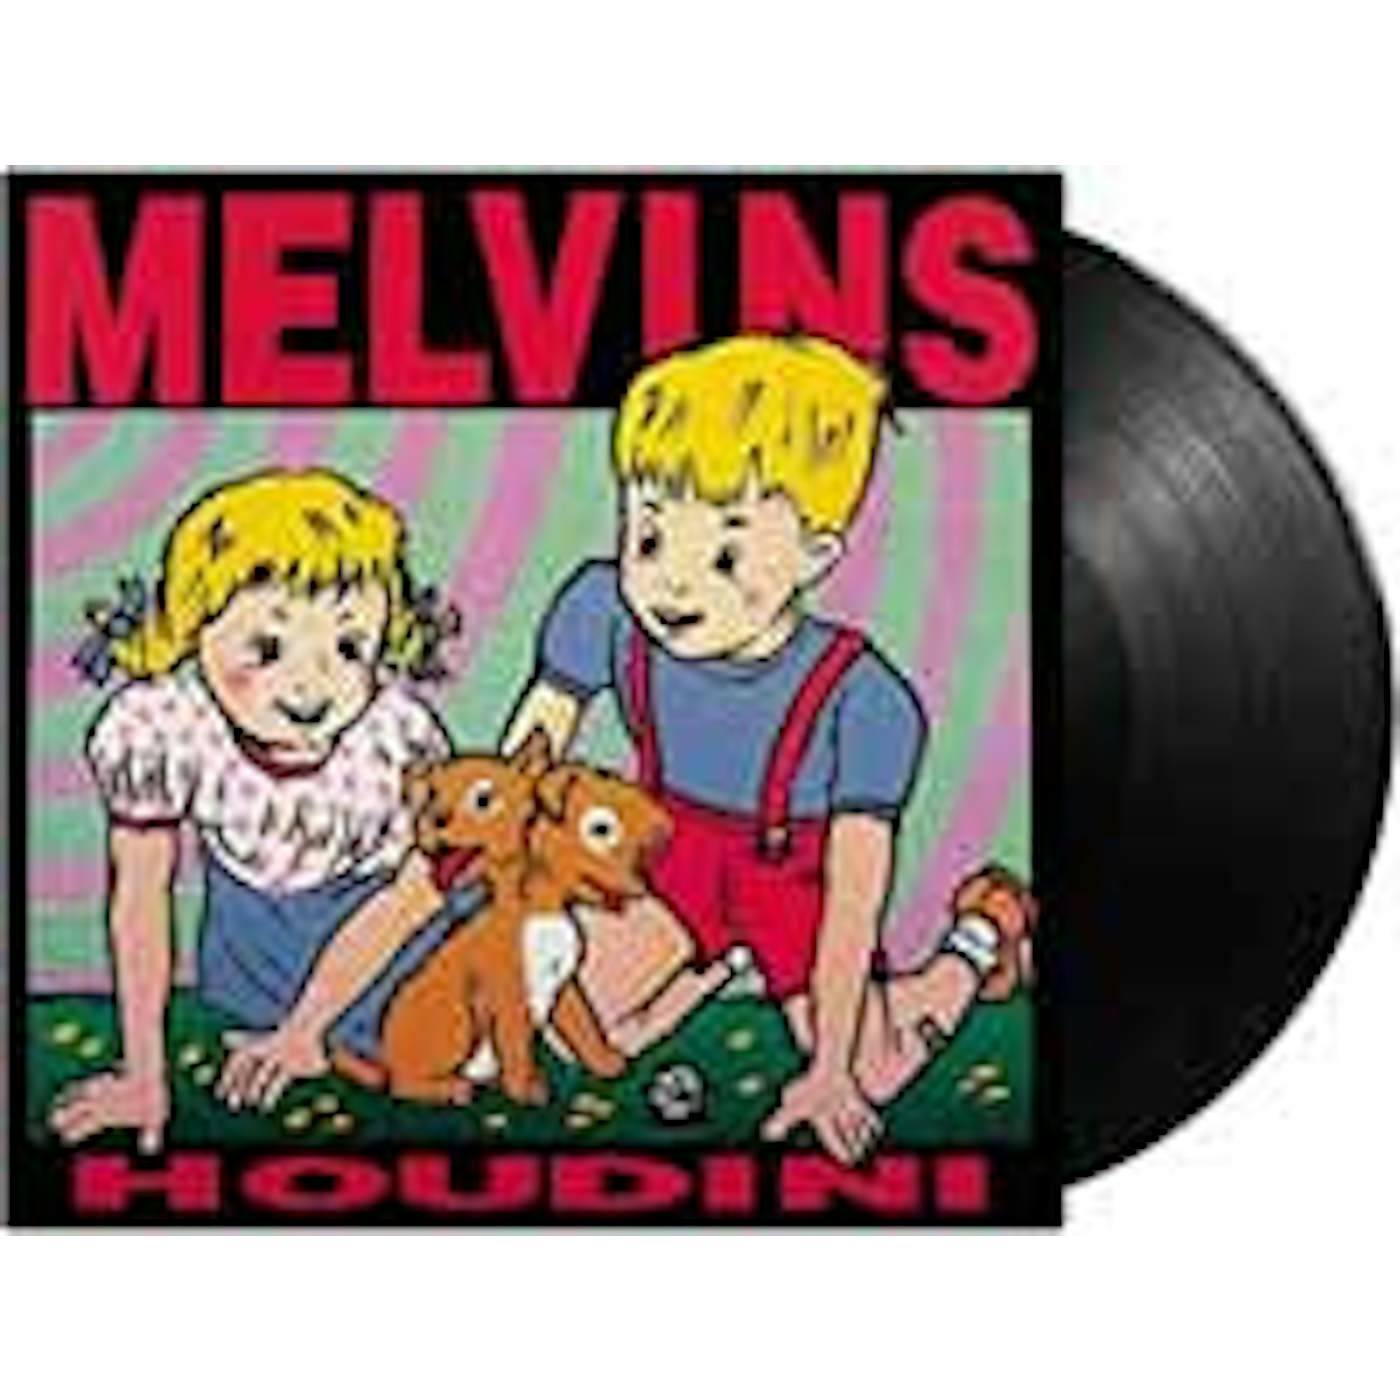 Melvins LP - Houdini (Vinyl)